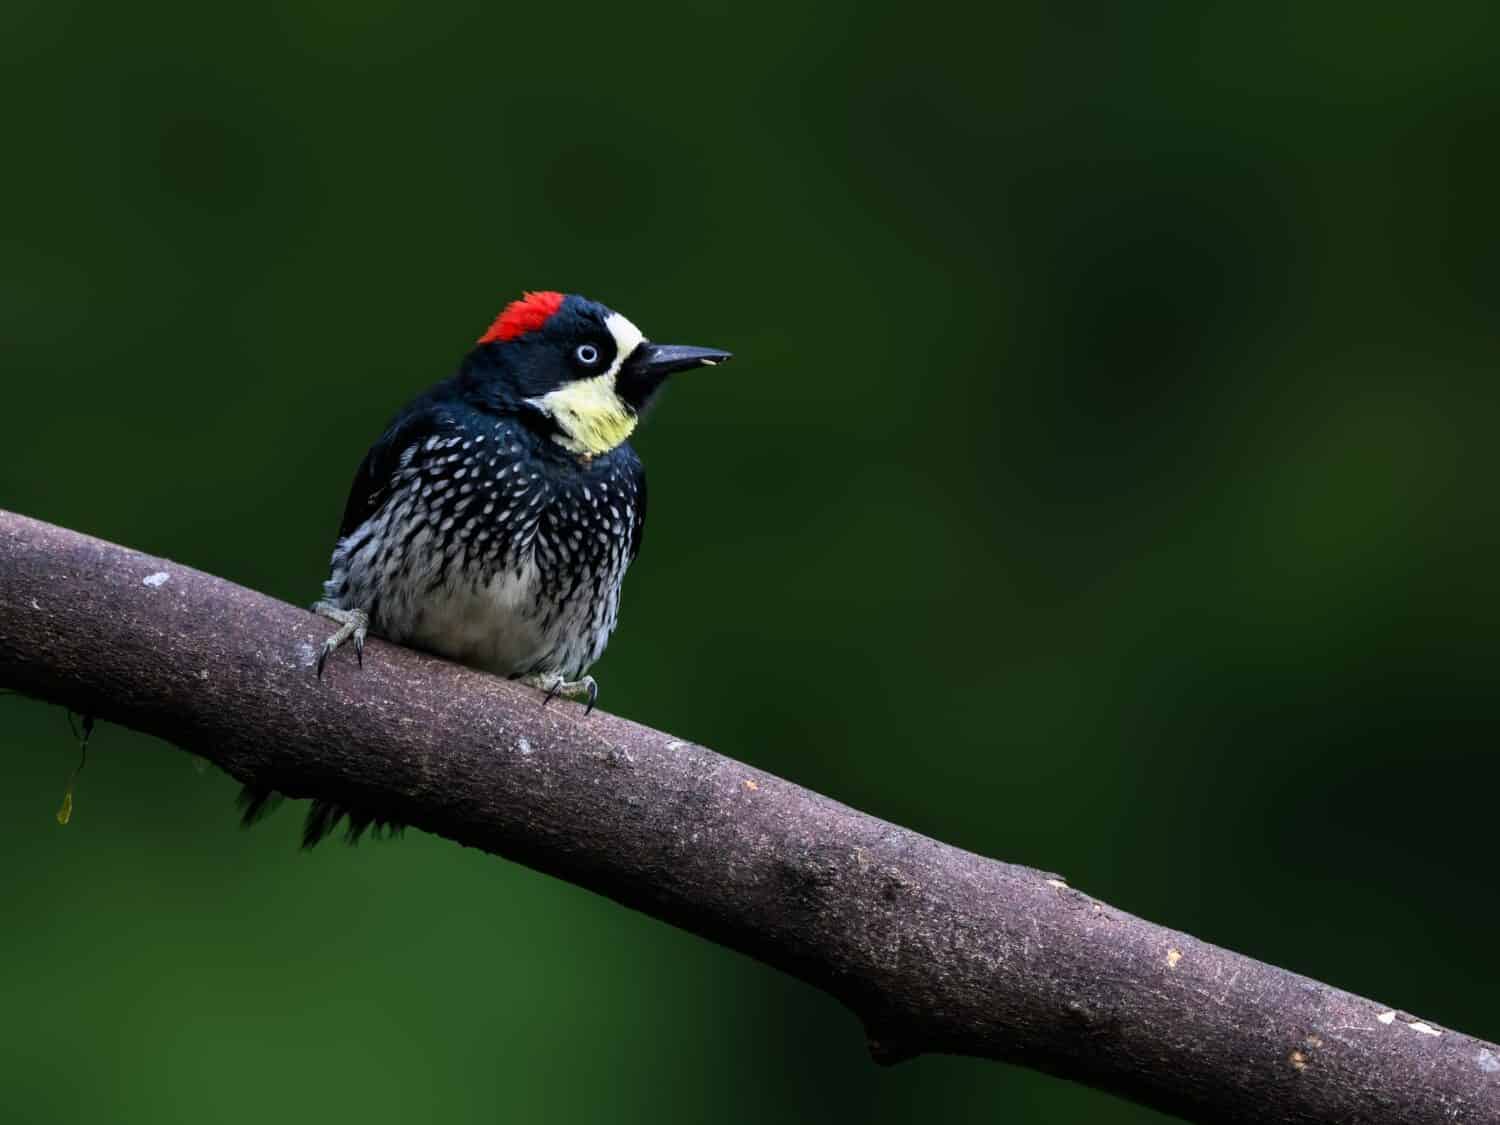 Acorn Woodpecker on tree branch against green background